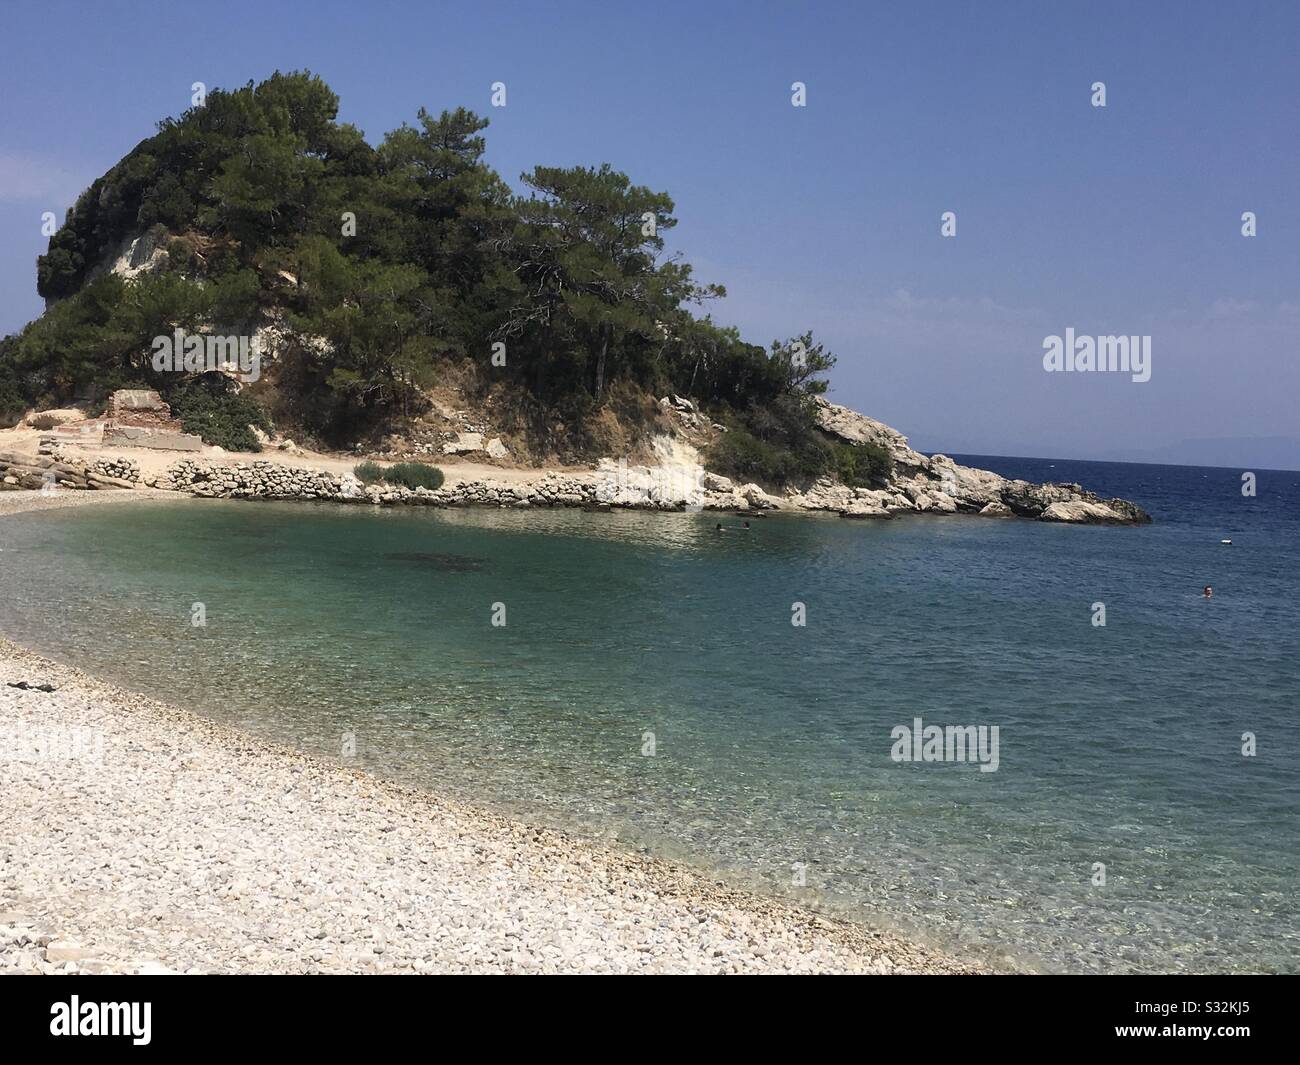 Rocky outcroft taken from the beach in Kokkari on the Greek Island of Samos. Taken 20th July 2018. Stock Photo